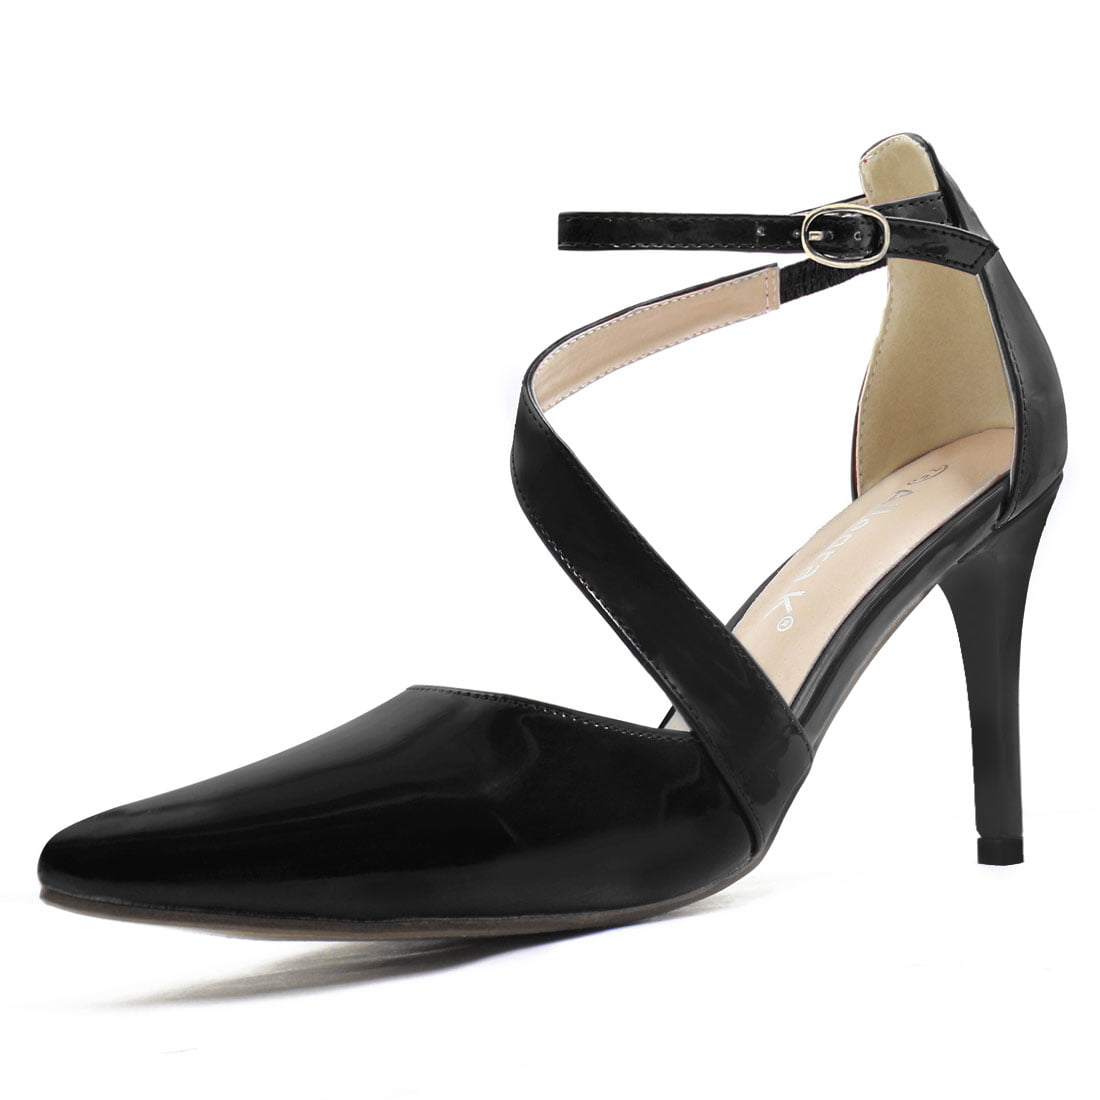 Women's Pointed Toe Ankle Strap Stiletto Heel Pumps Black US 8.5 ...